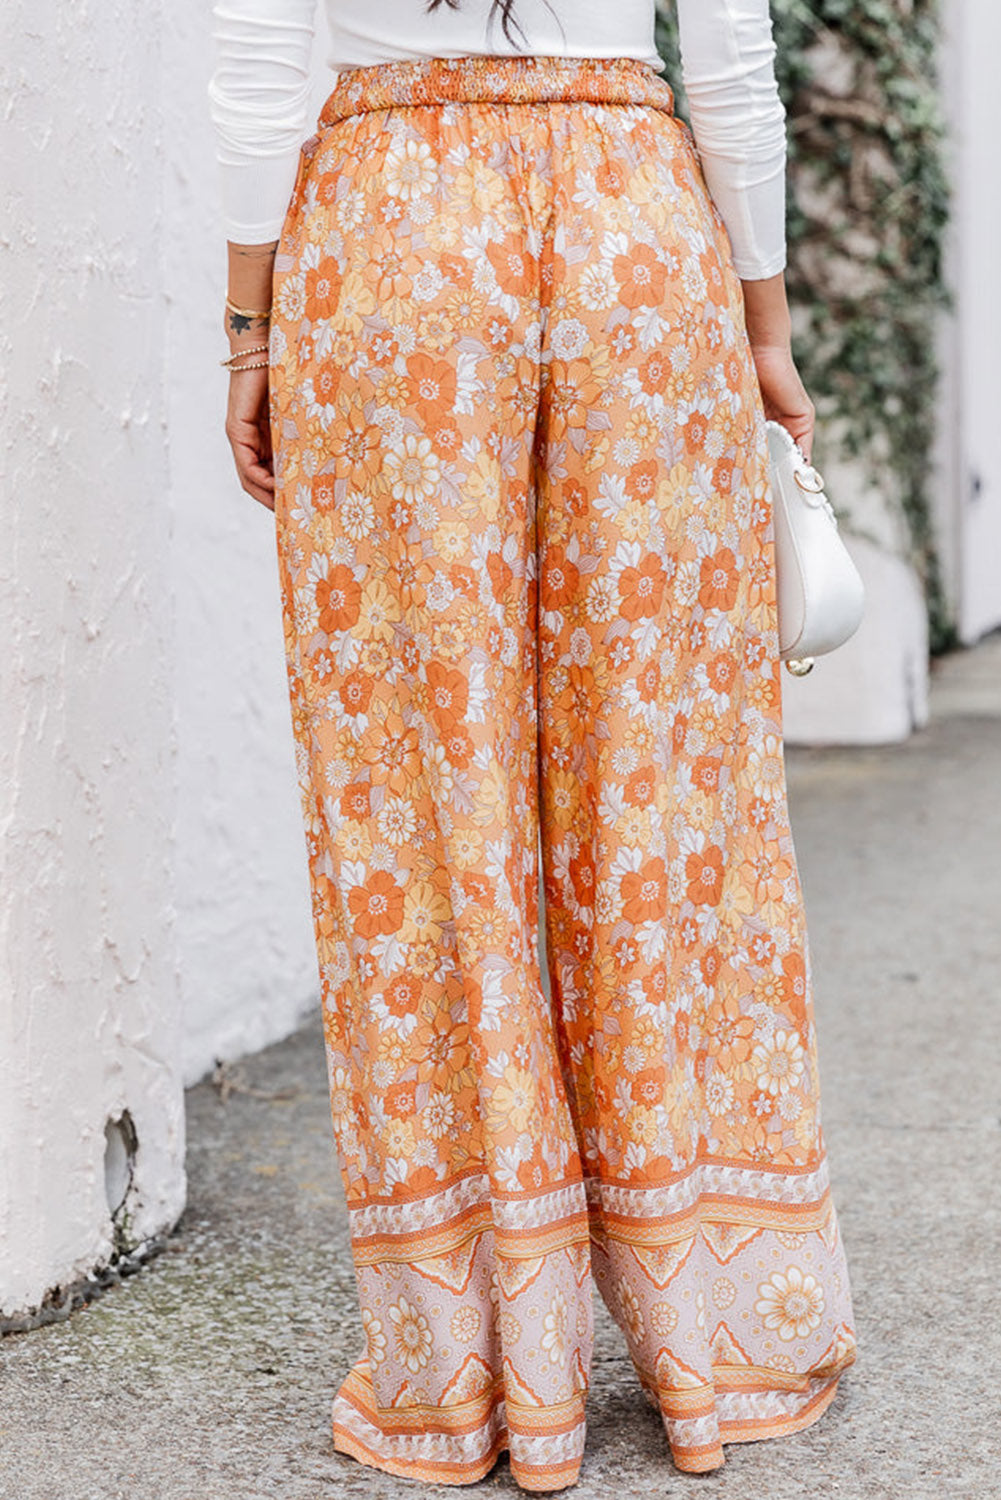 Boho hlače širokih nogavica s cvjetnim uzorkom u boji grejpfrut naranče